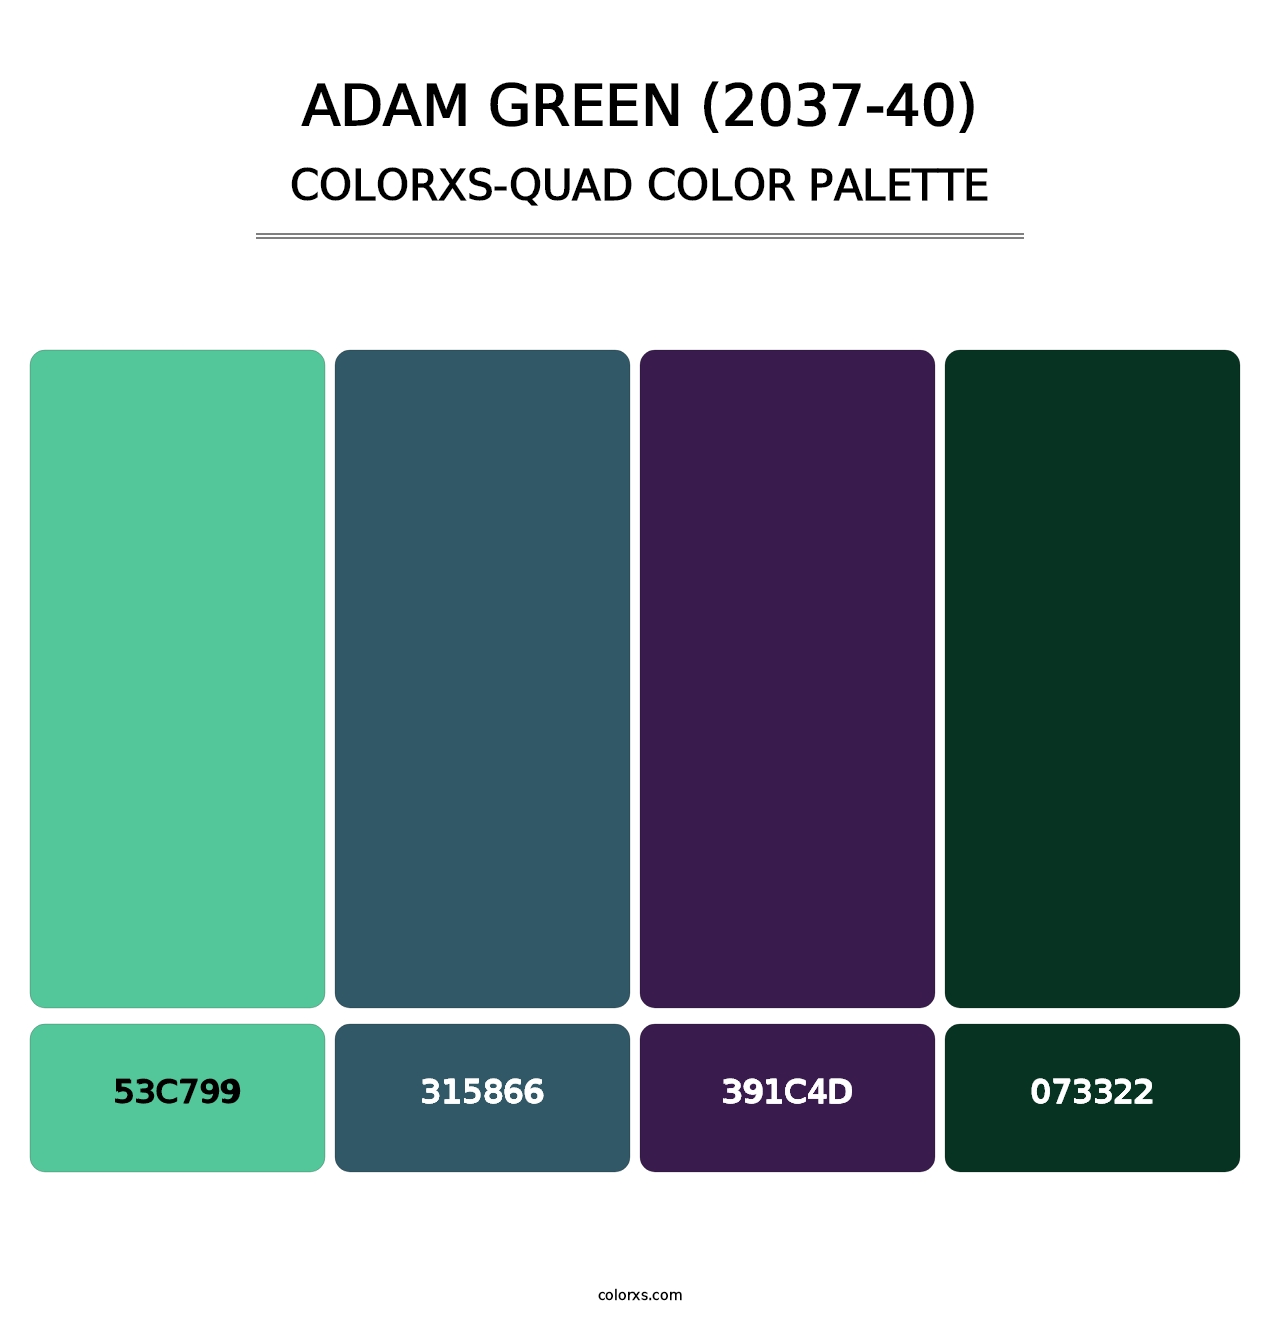 Adam Green (2037-40) - Colorxs Quad Palette